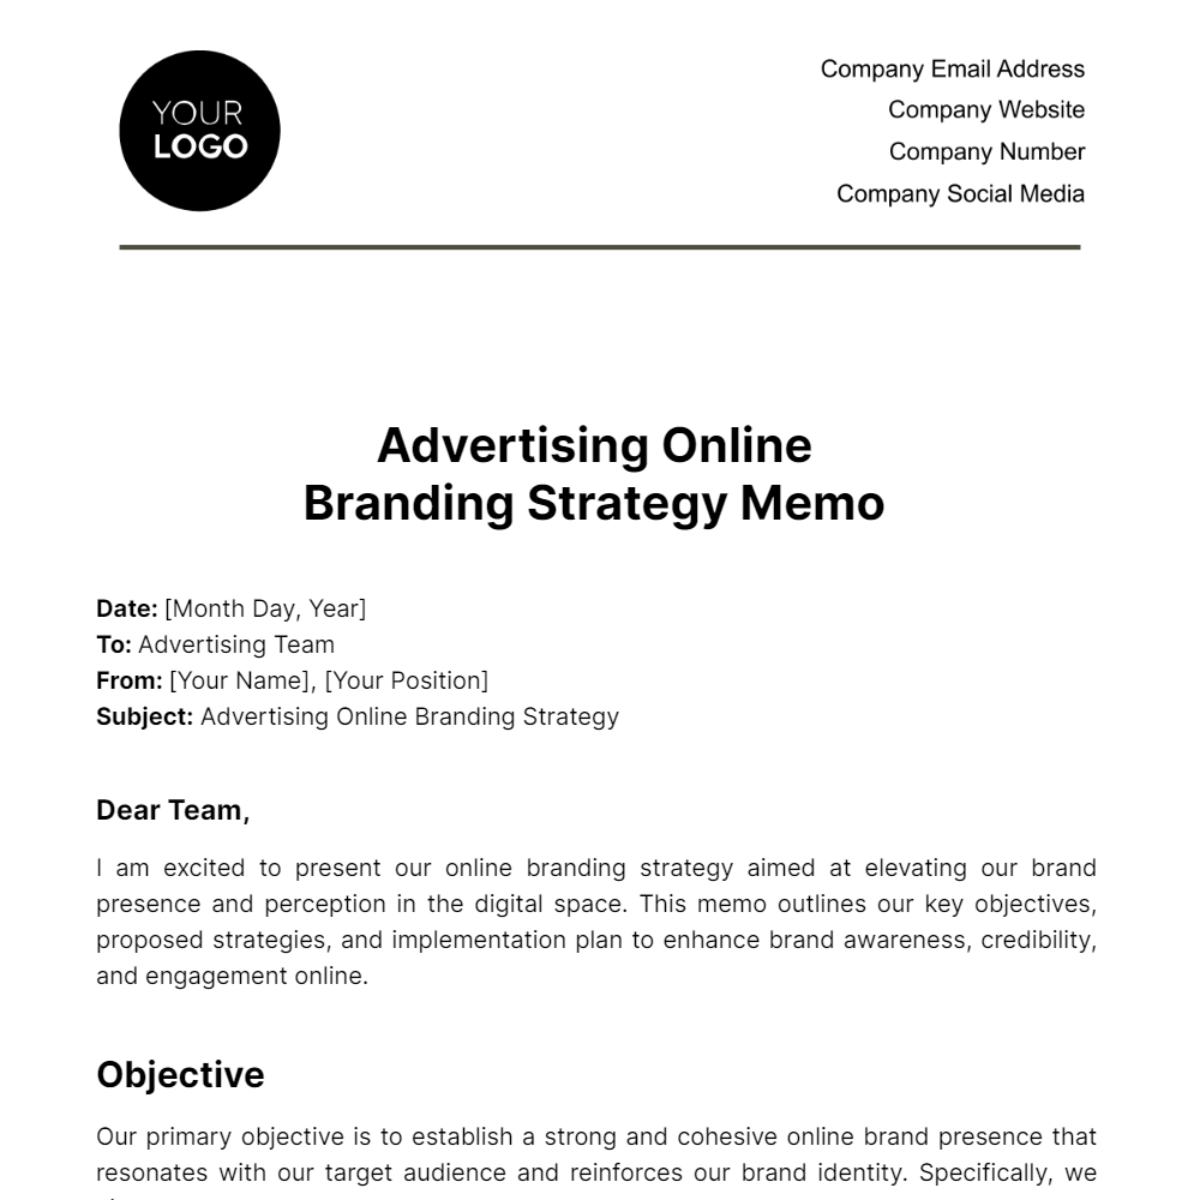 Advertising Online Branding Strategy Memo Template